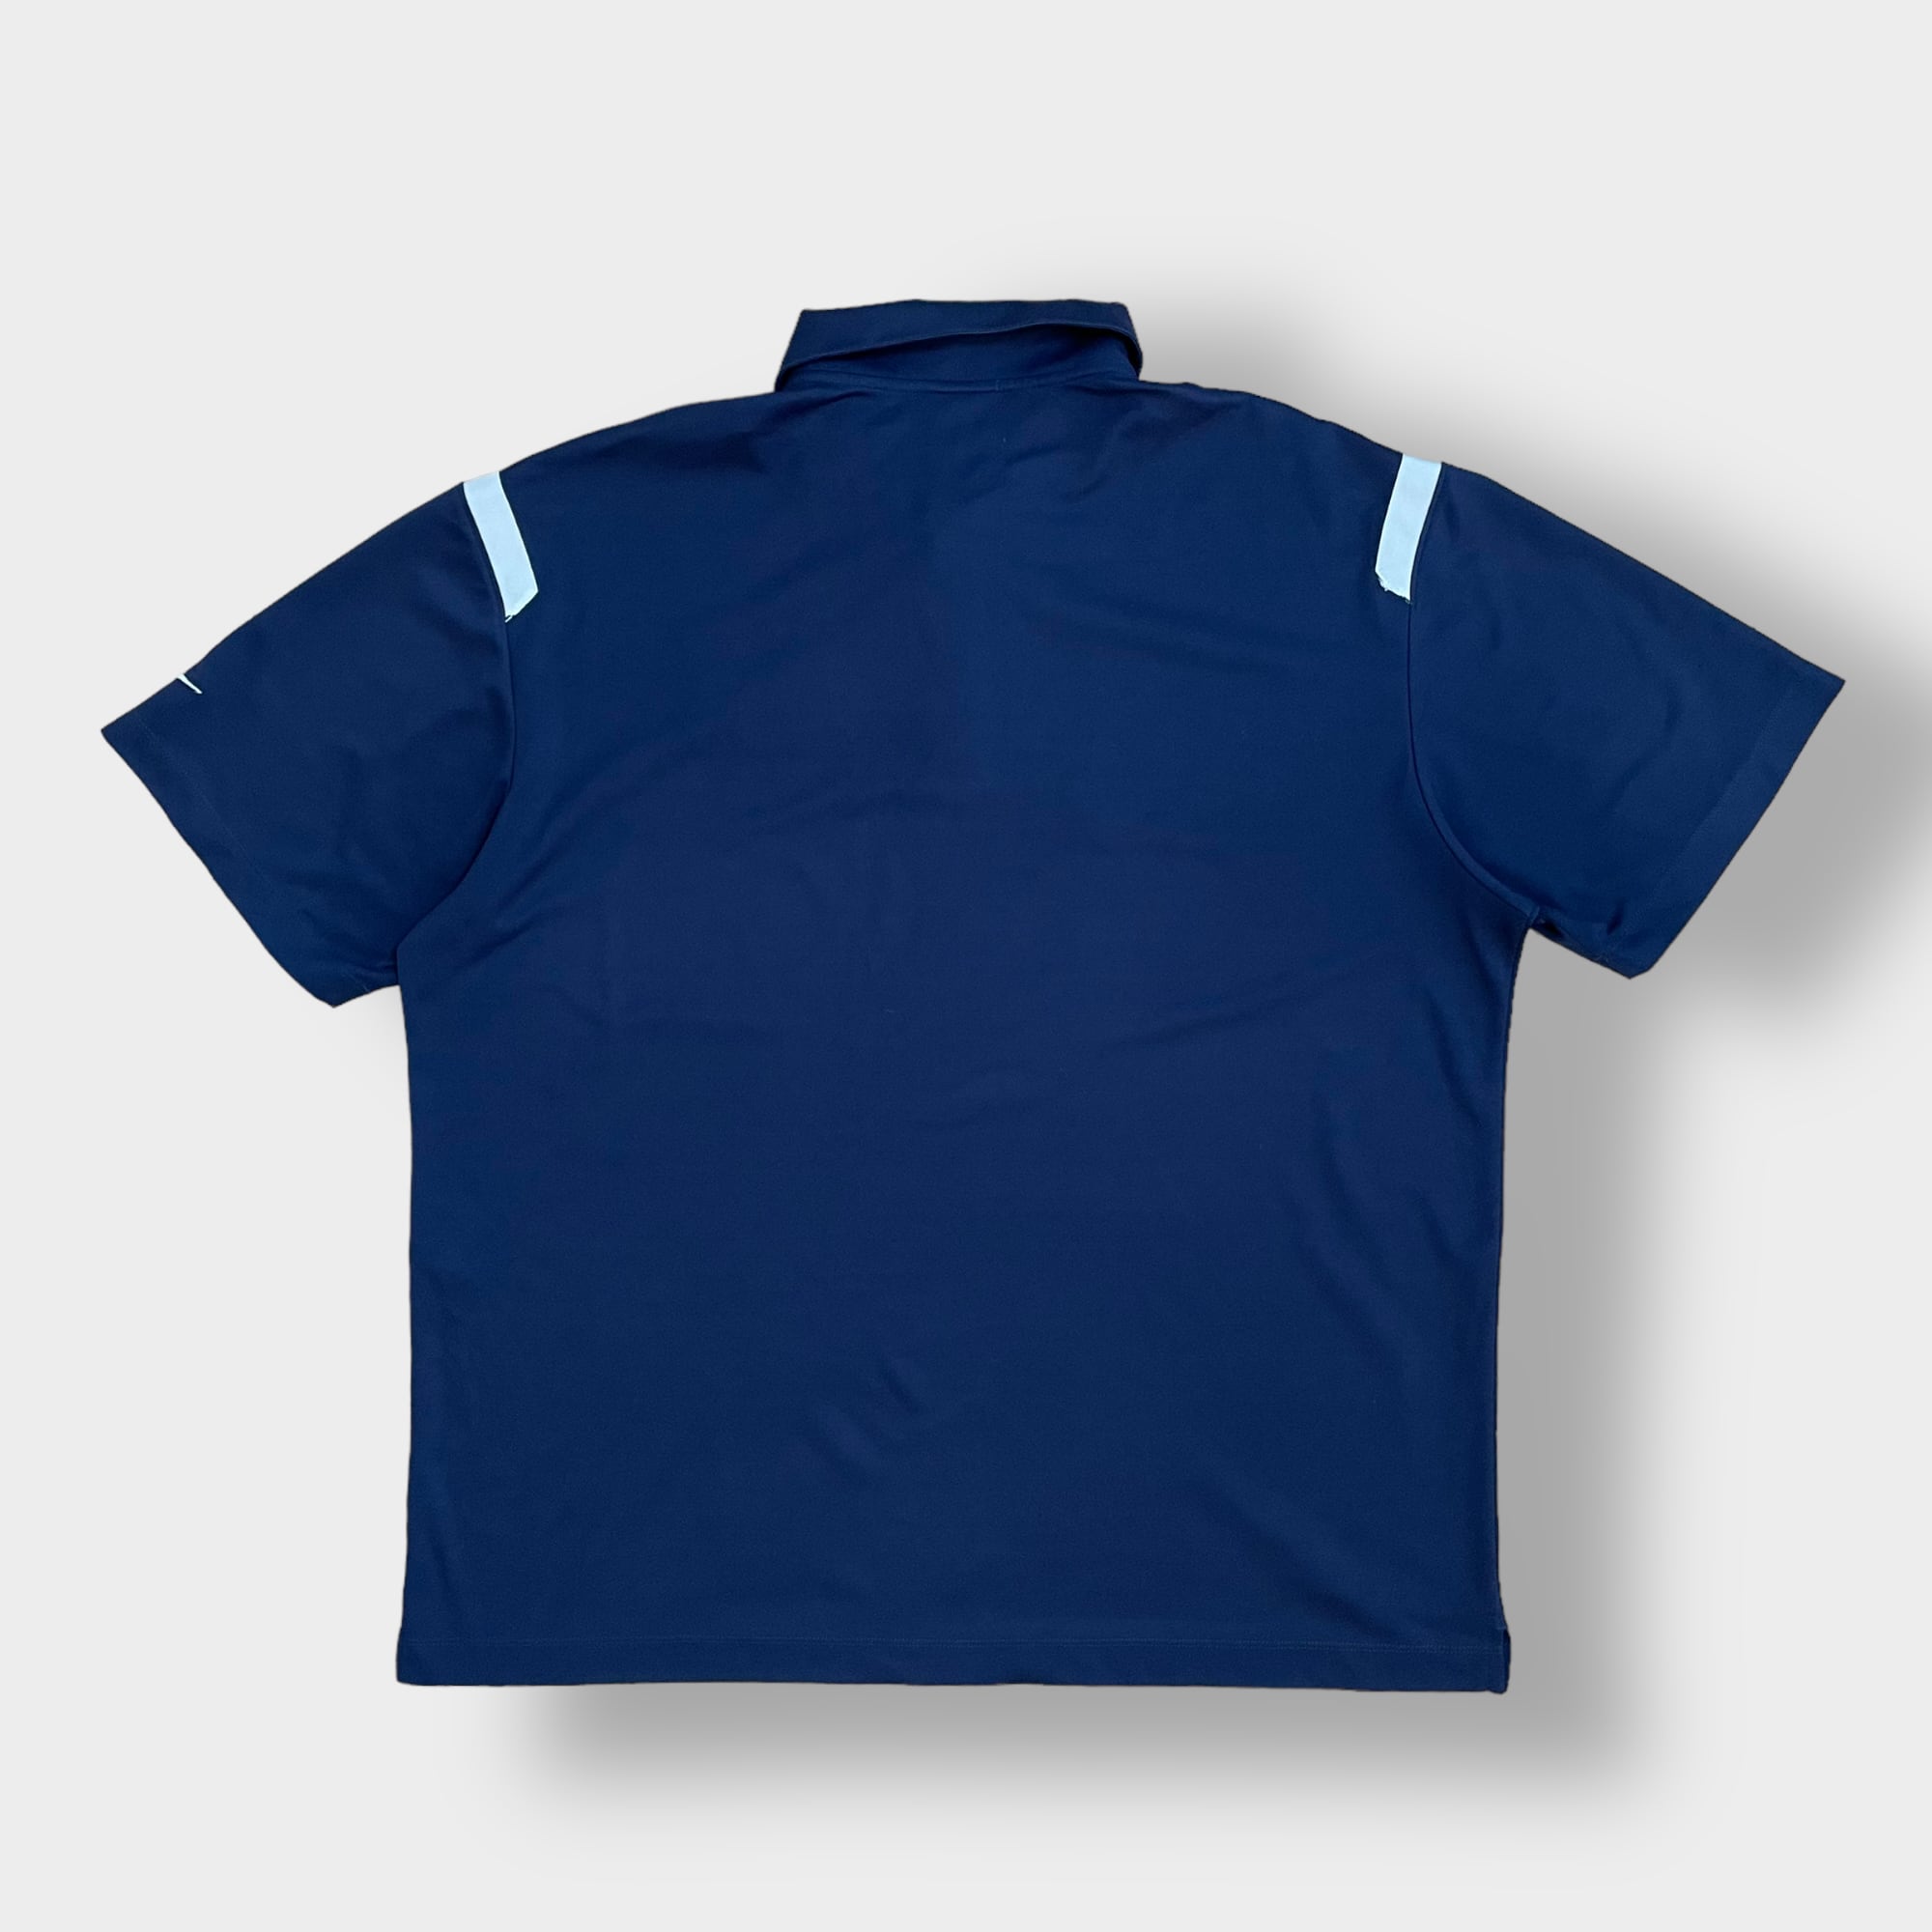 NIKE】企業系 ワンポイント ポロシャツ DRI-FIT スウッシュ 刺繍ロゴ